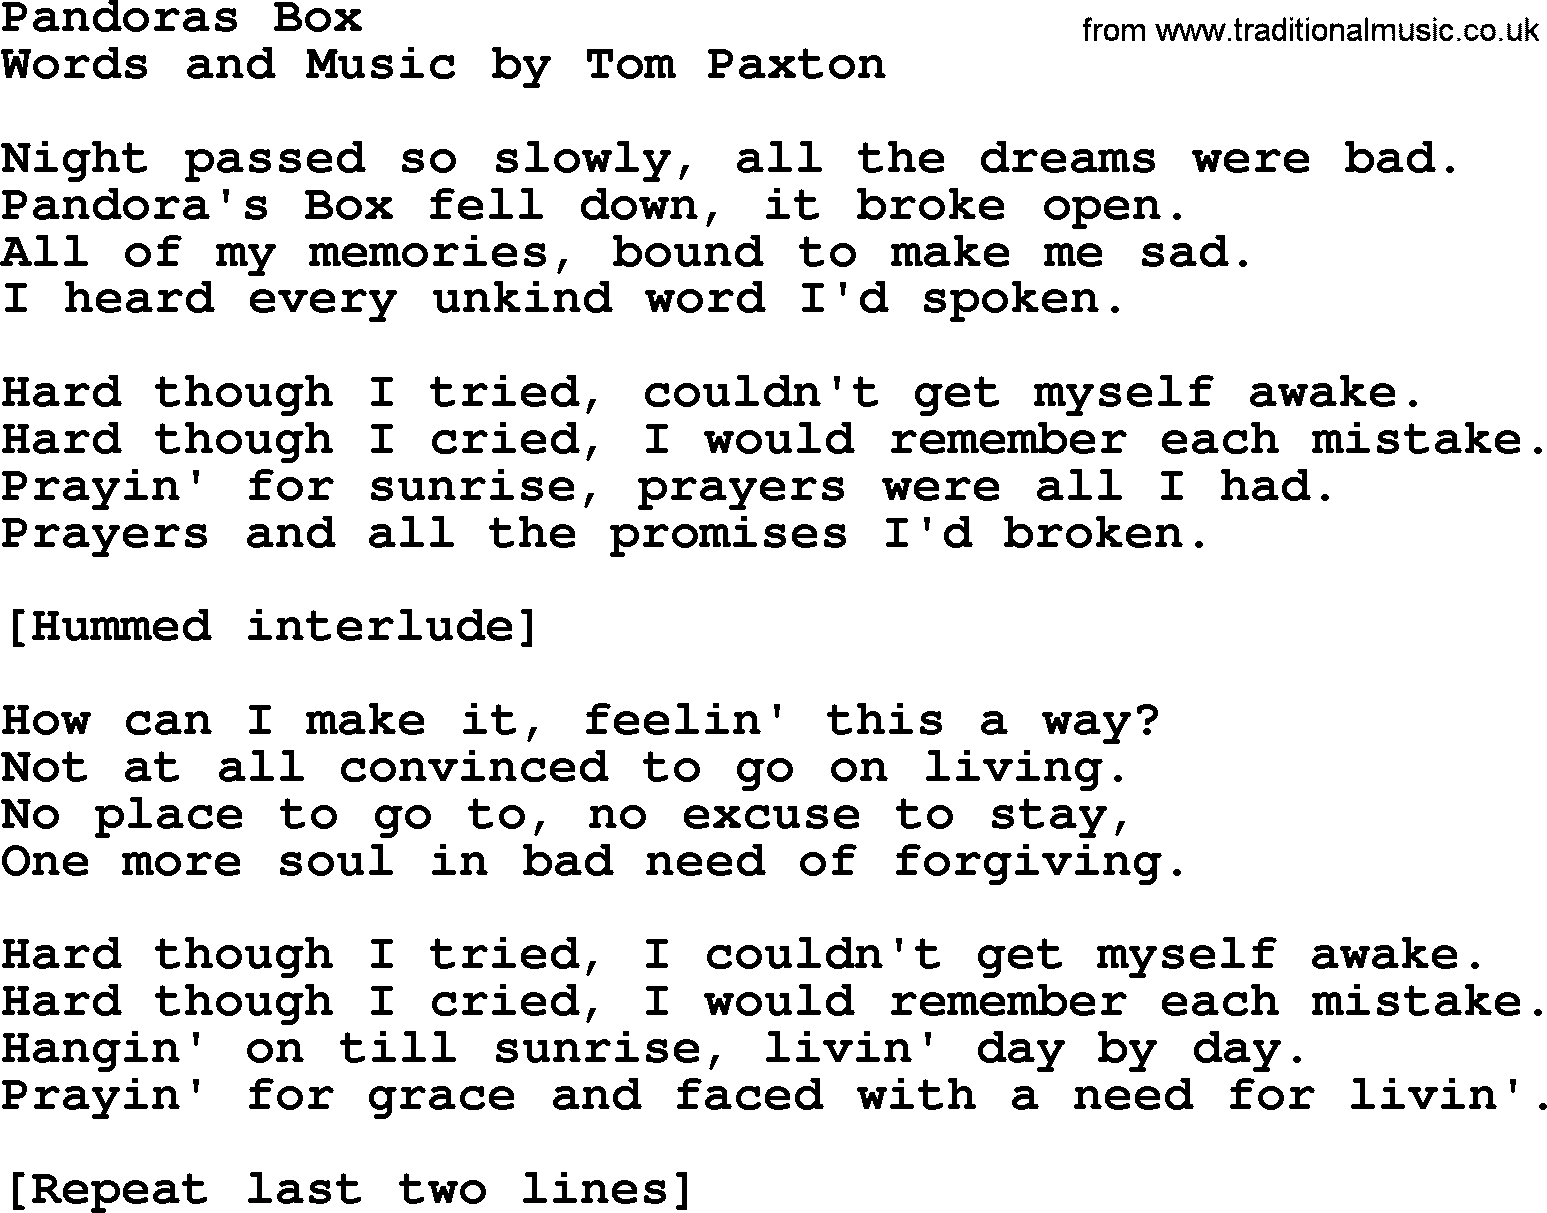 Tom Paxton song: Pandoras Box, lyrics